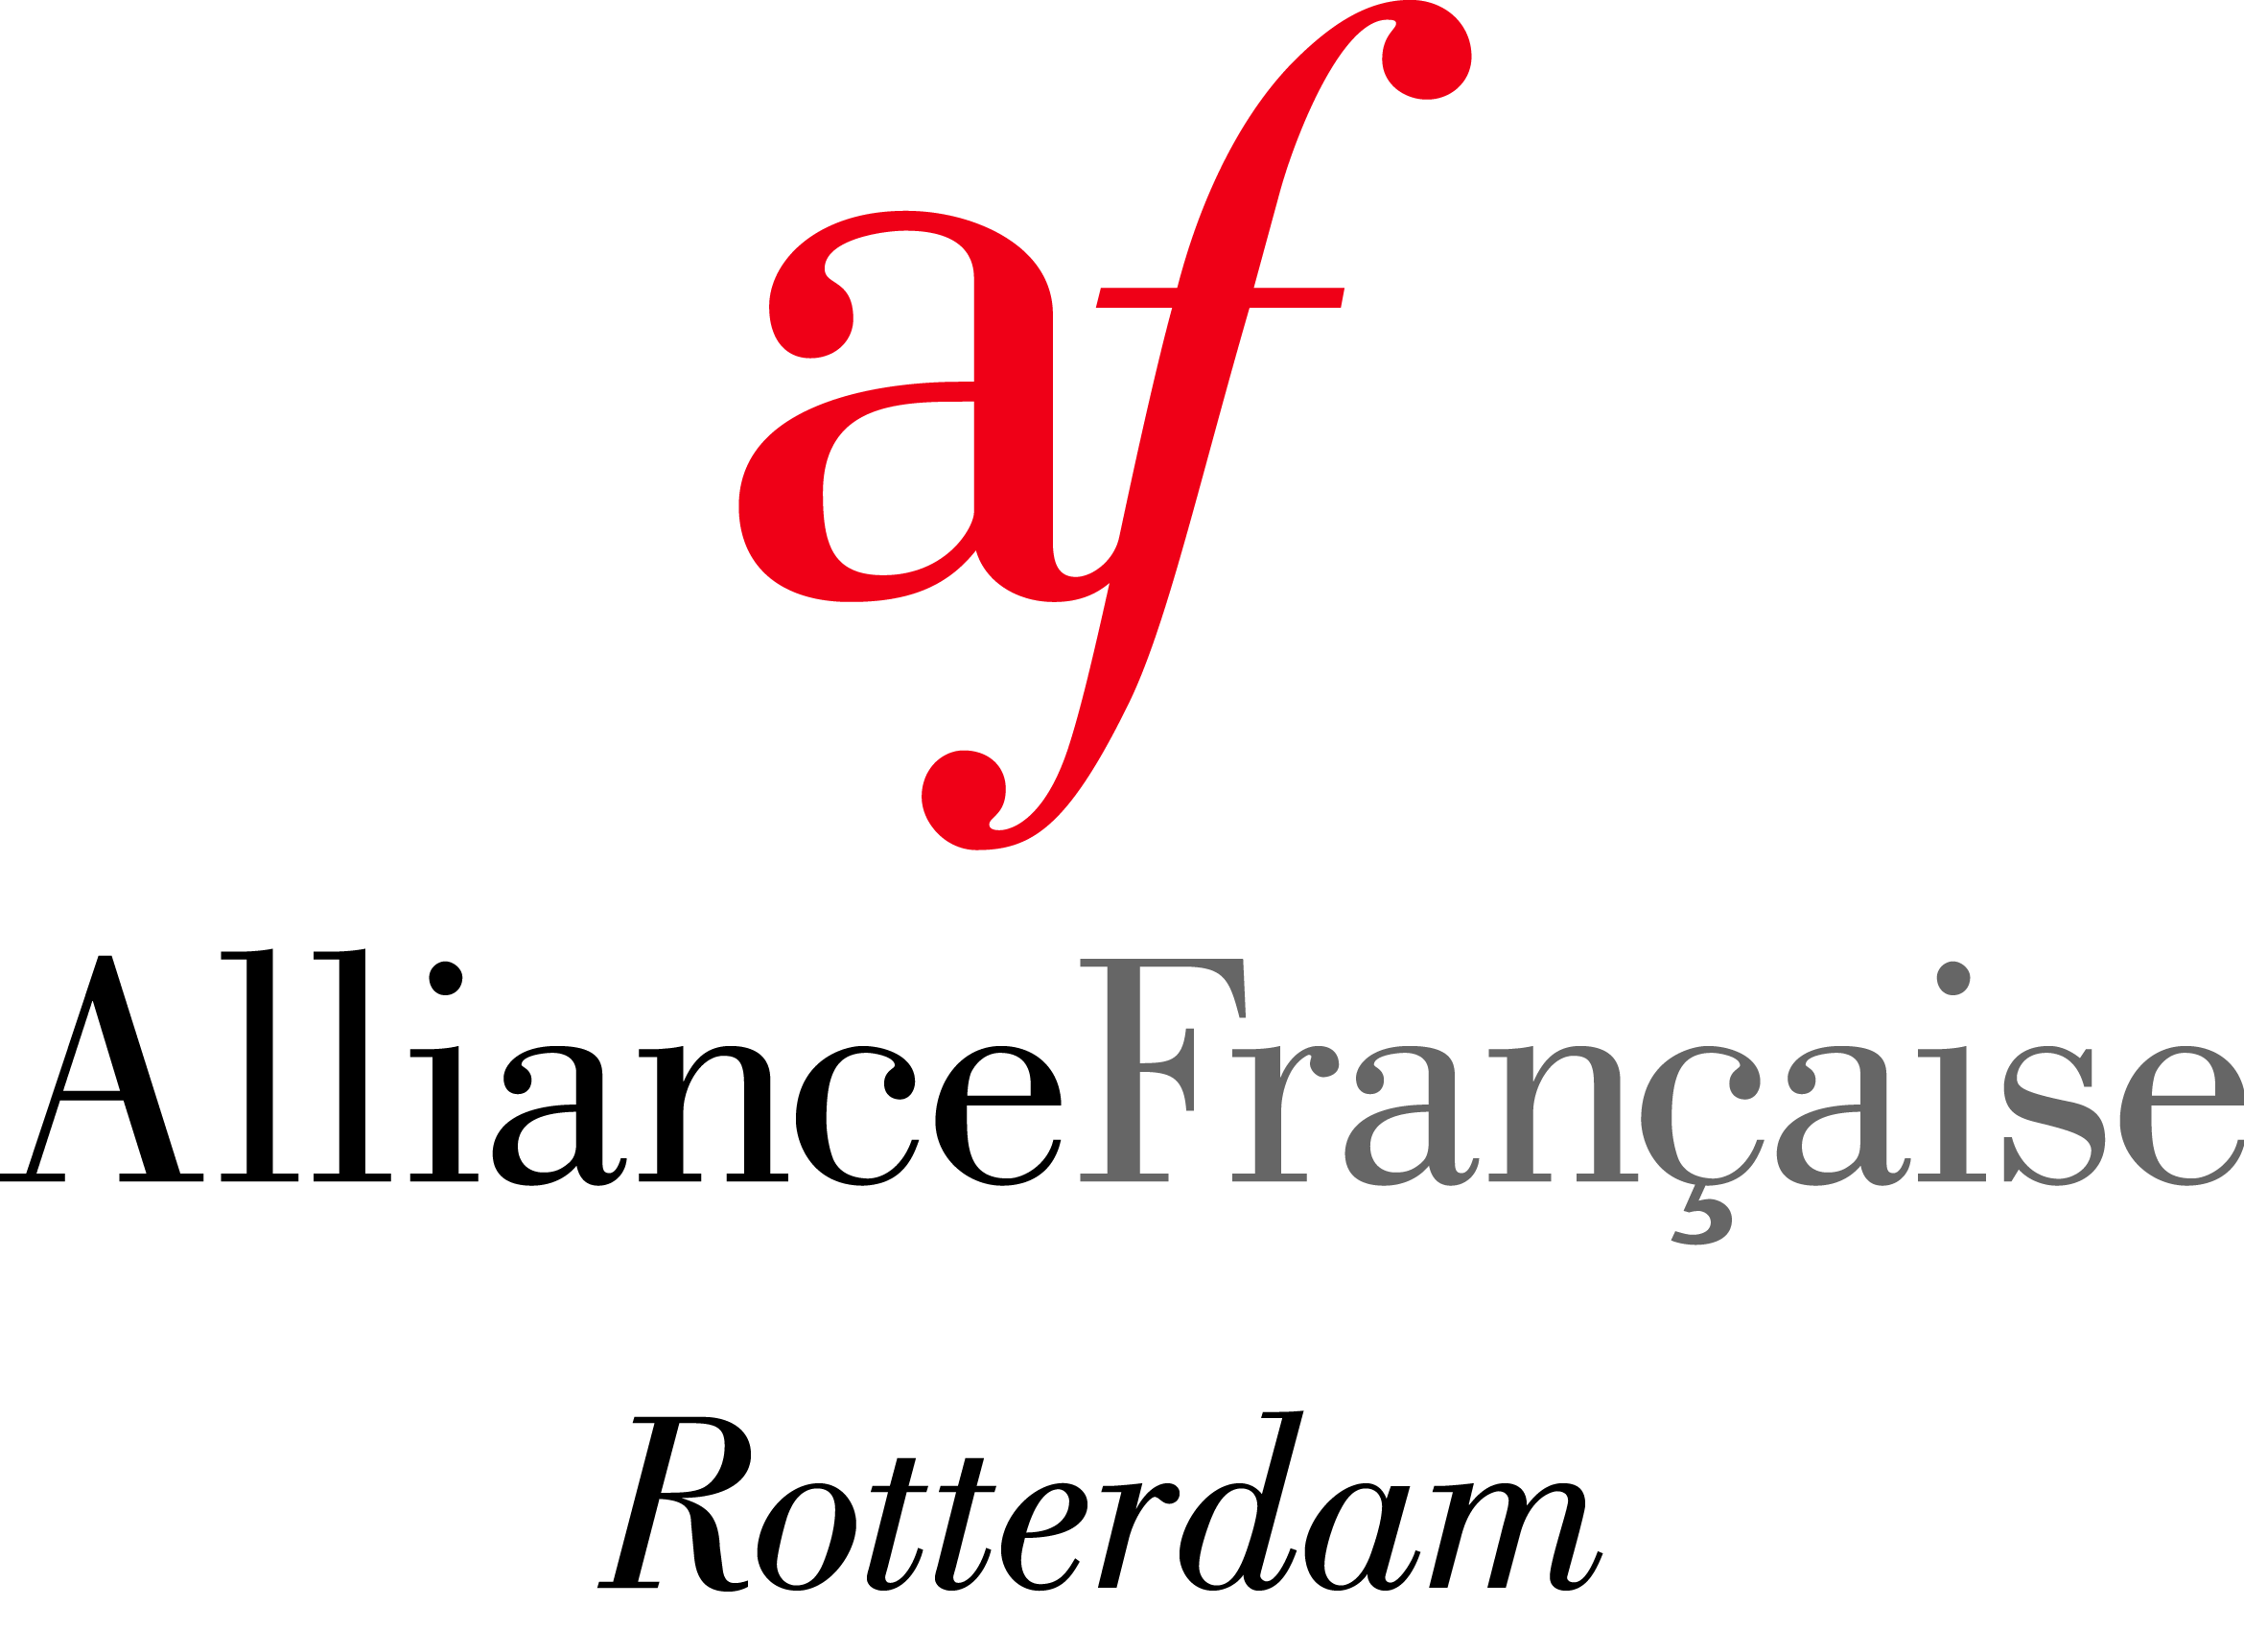 Alliance Française Rotterdam